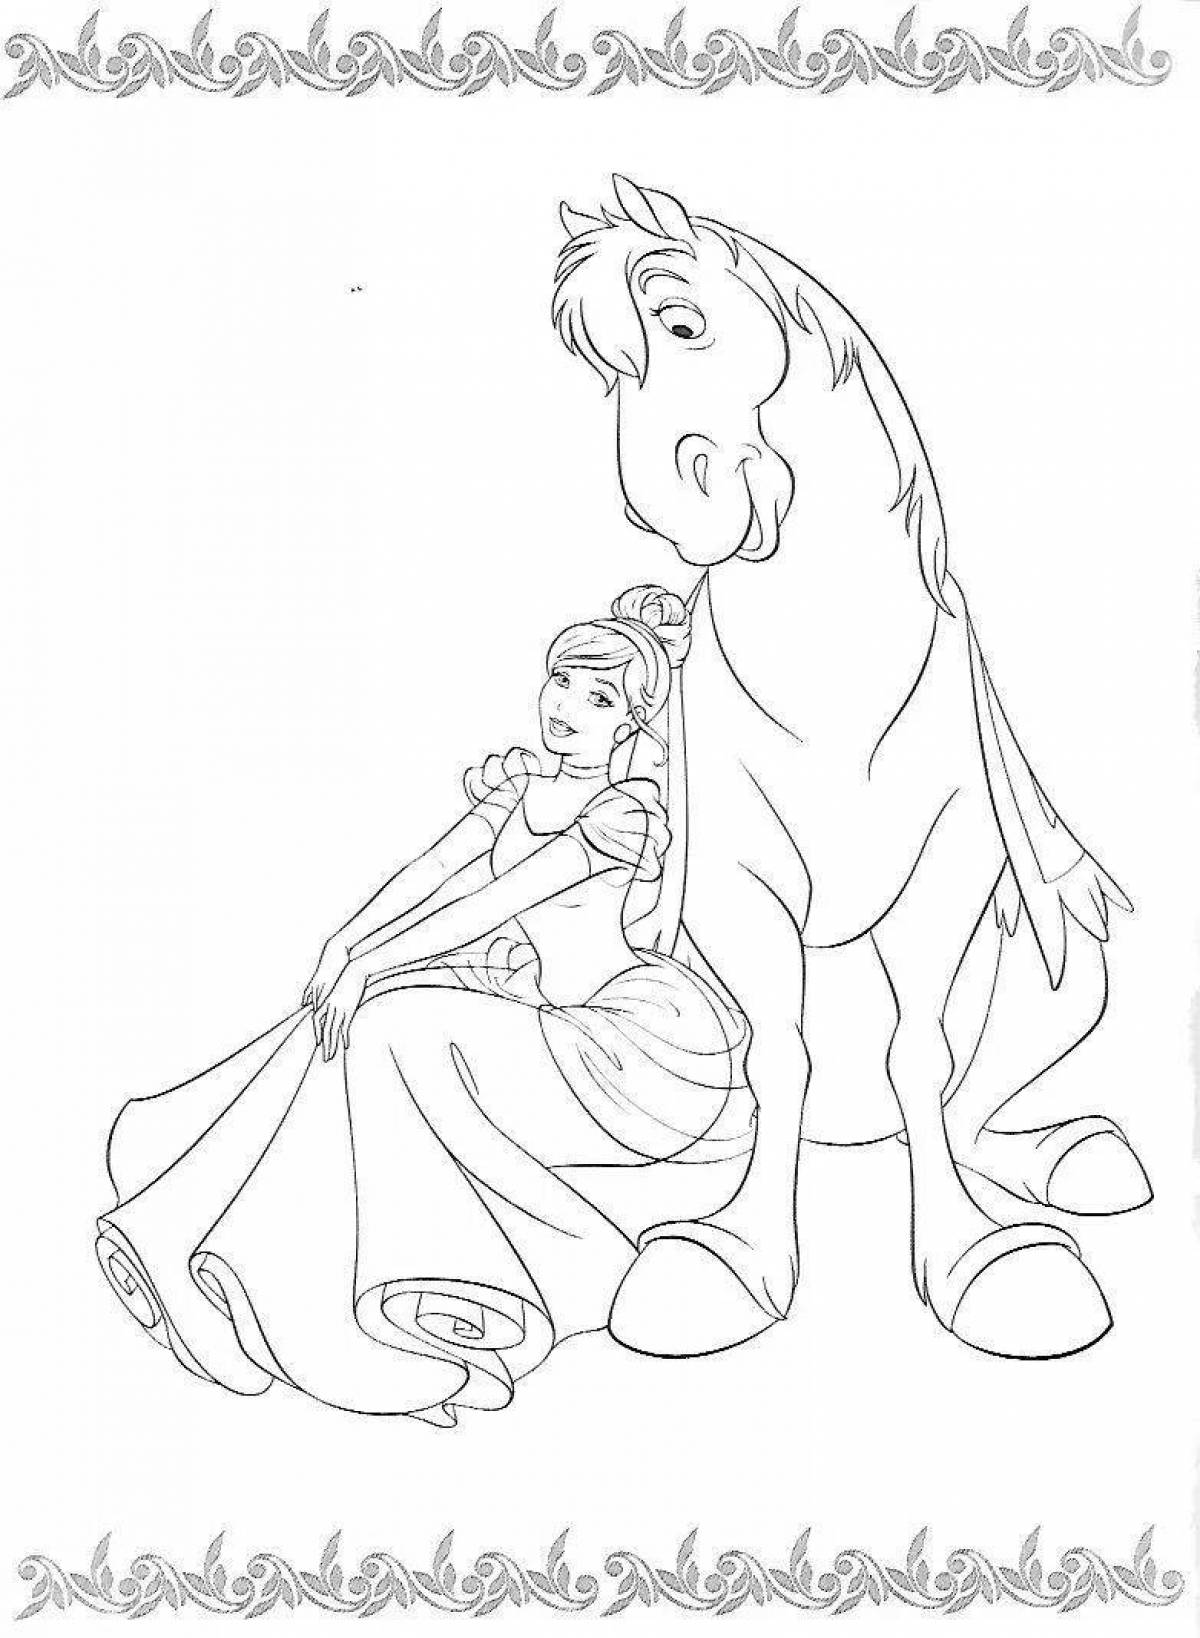 Princess on a horse #2